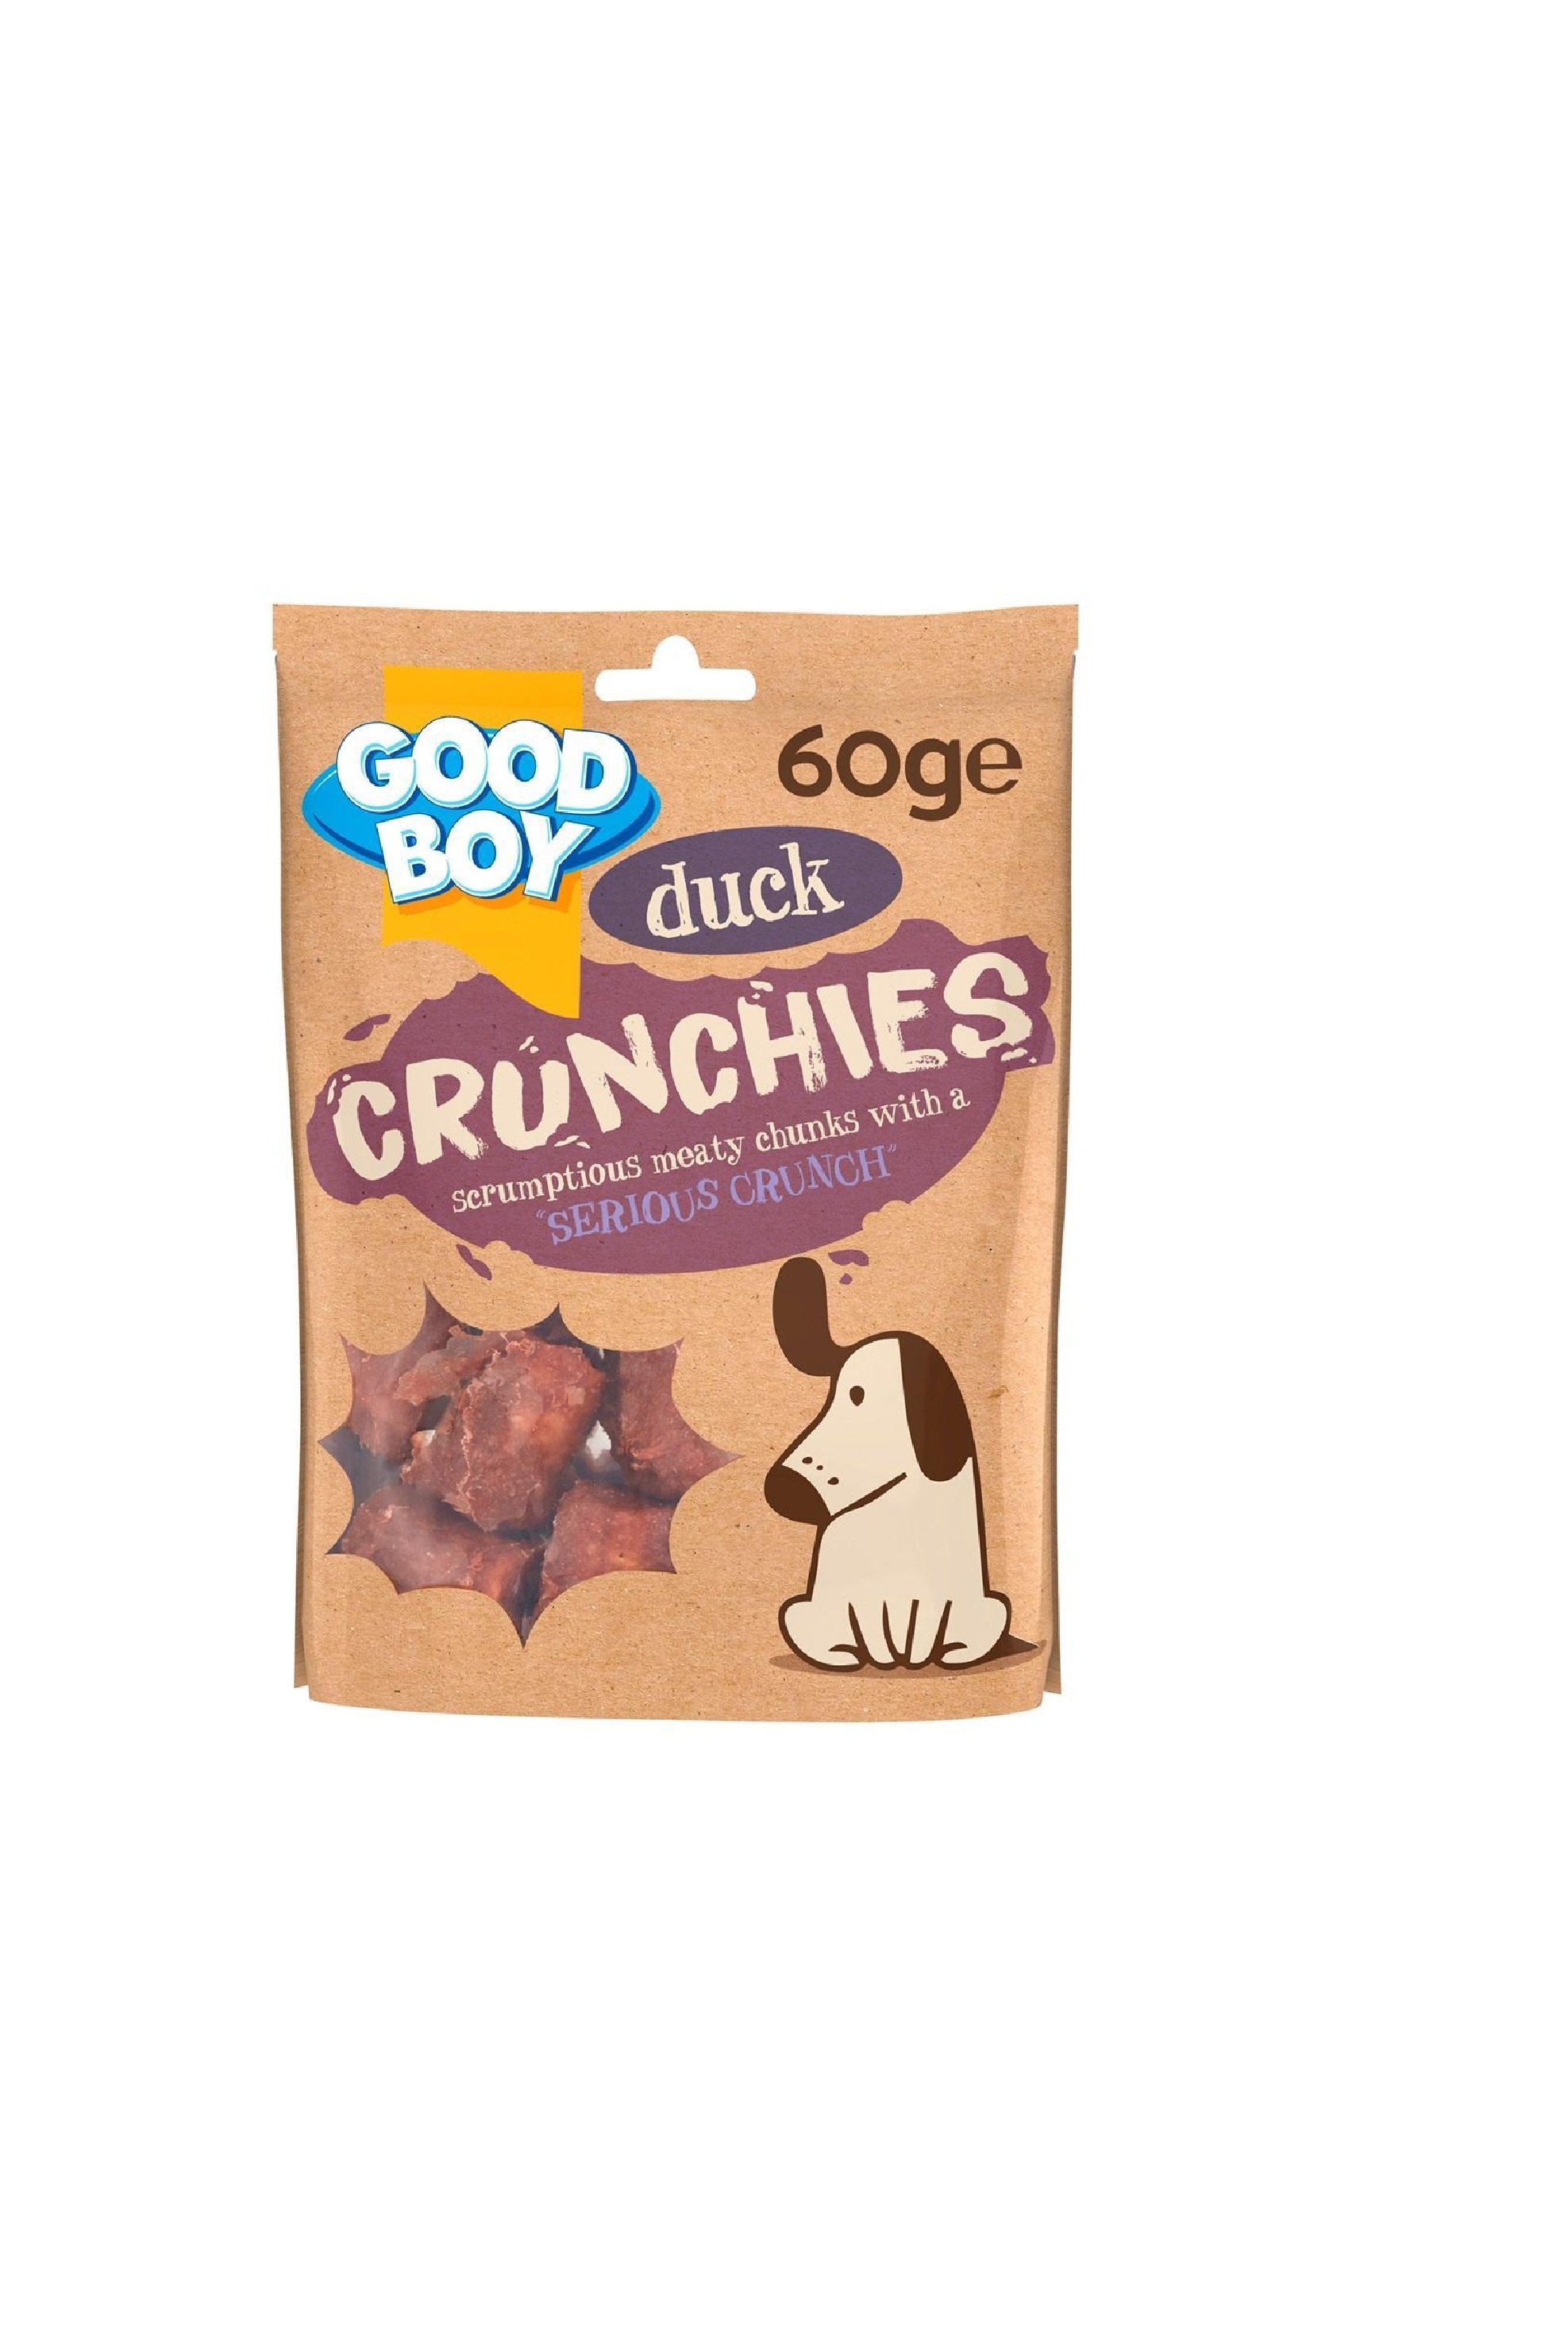 Good Boy Crunchies Duck 8 x 60g